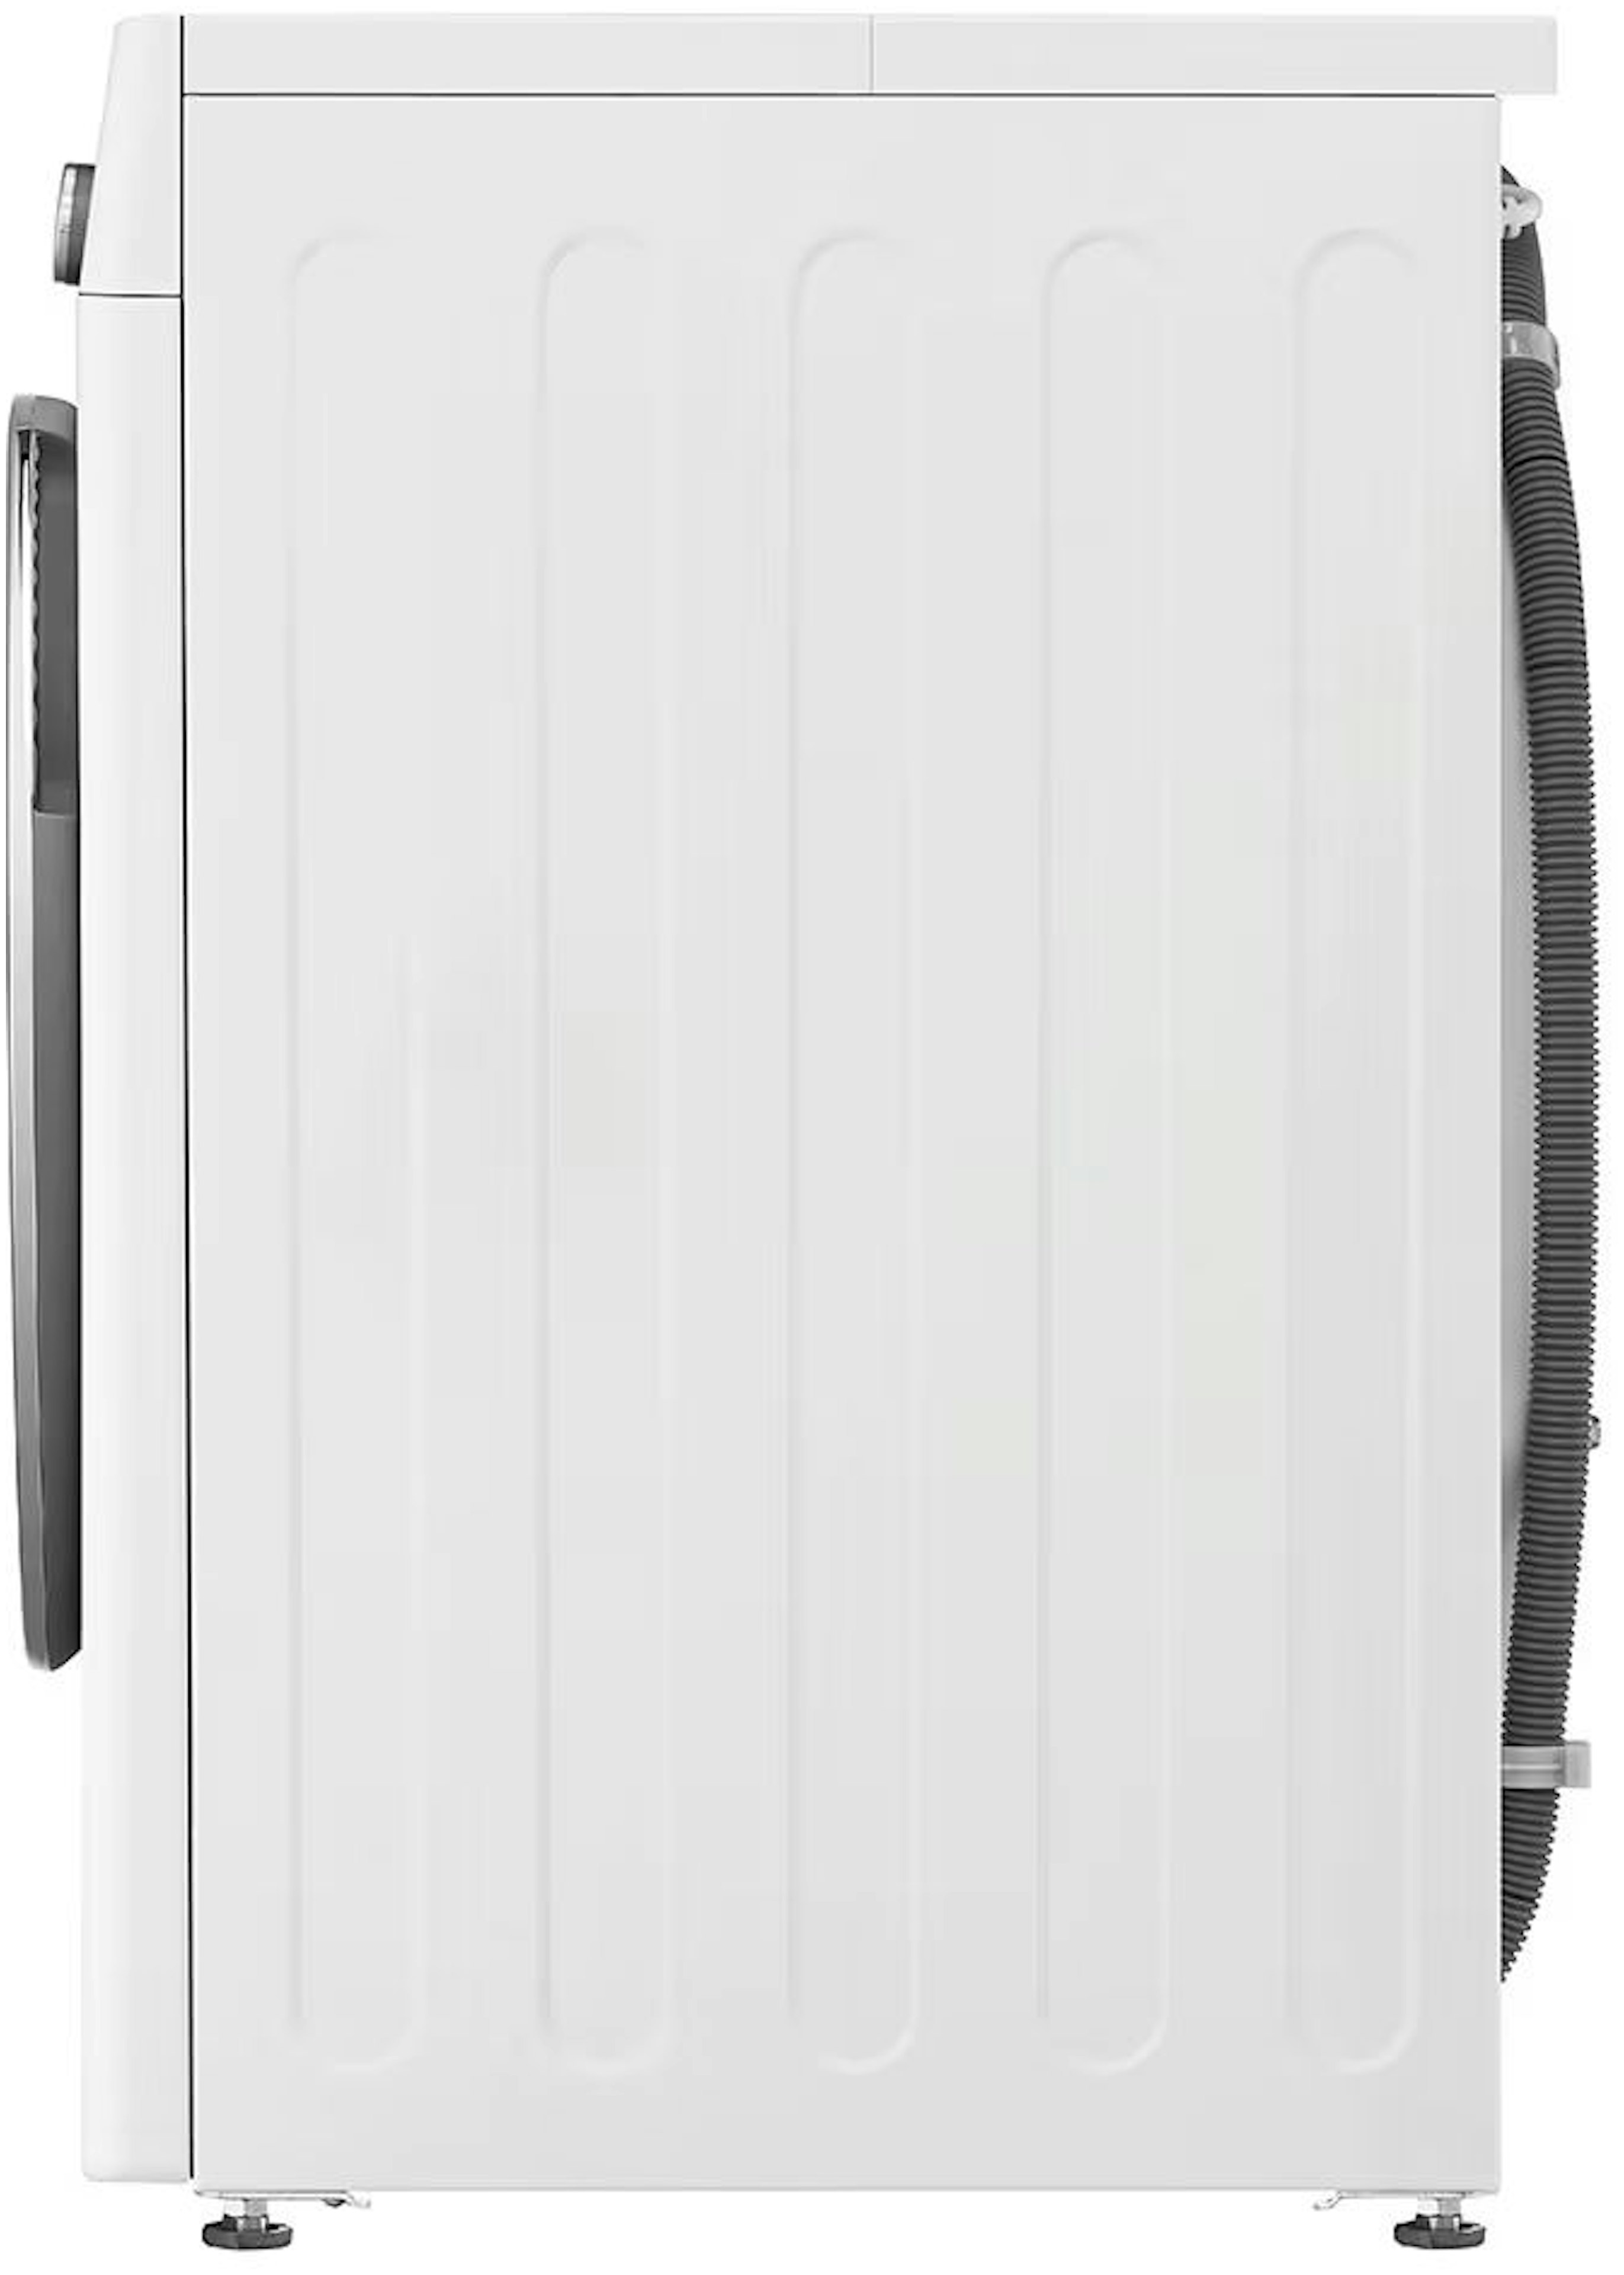 LG F4WR7009S2W  wasmachine afbeelding 5